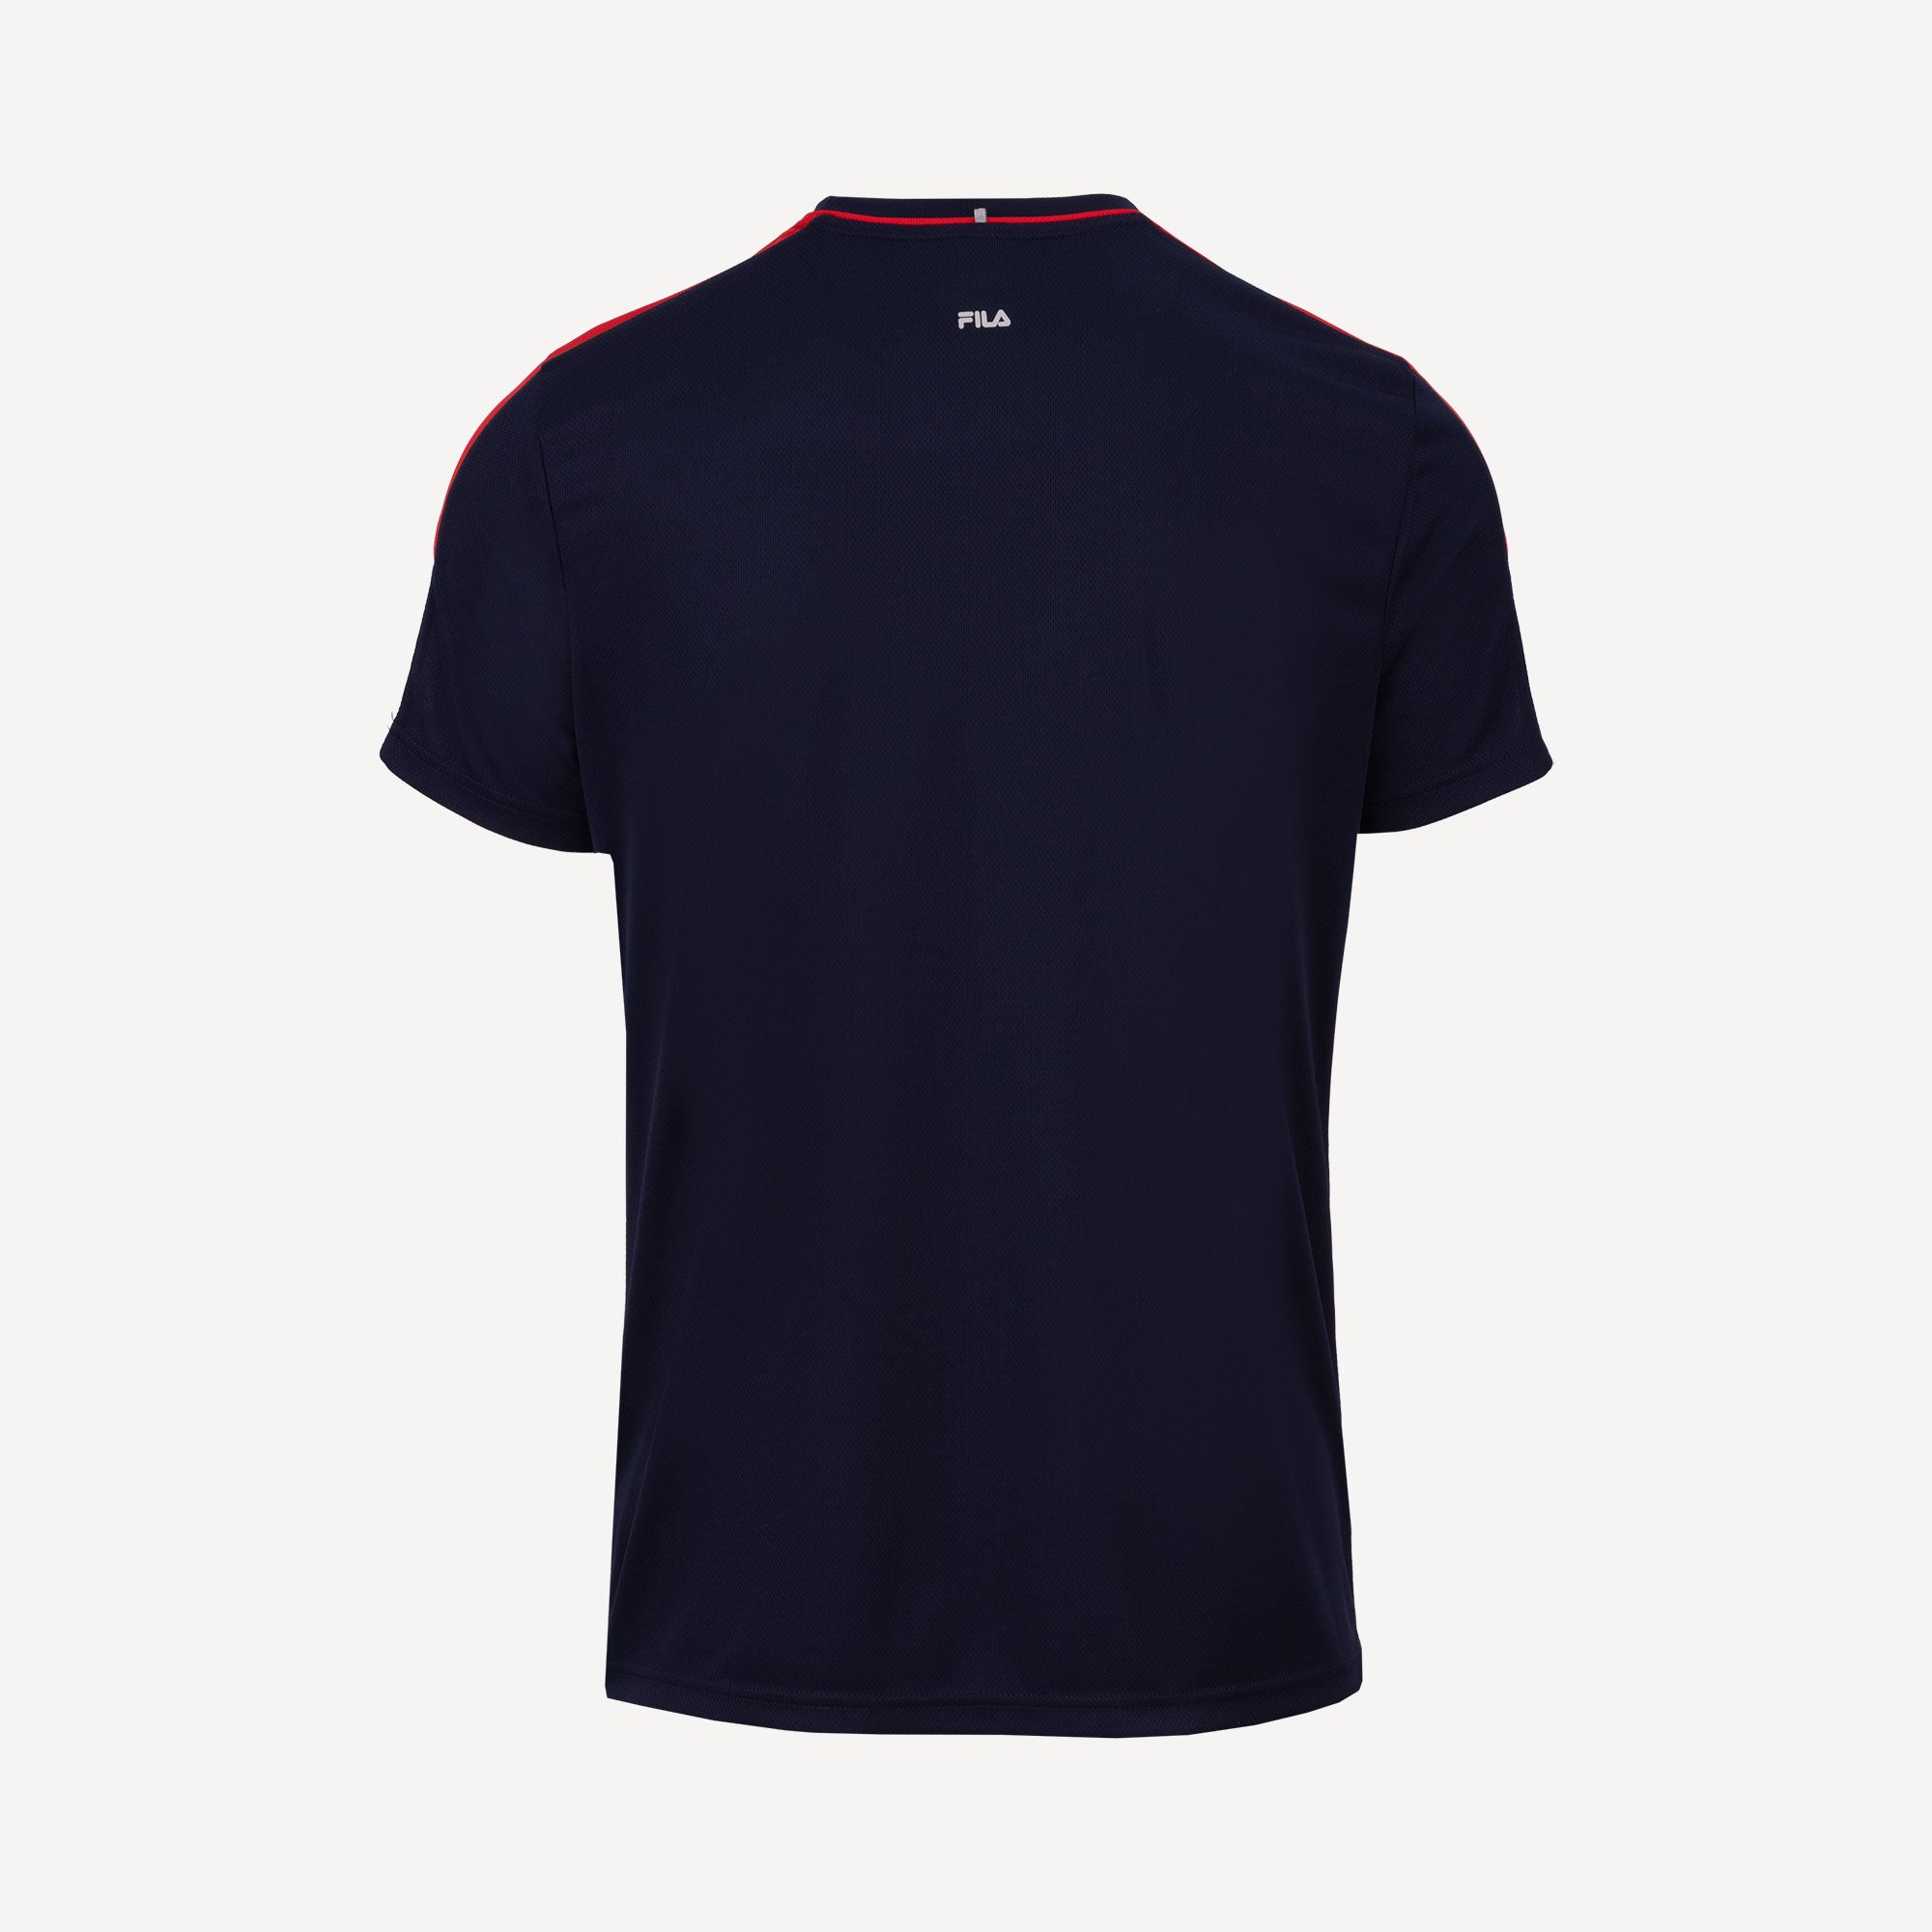 Fila Gabriel Men's Tennis Shirt - Dark Blue (2)